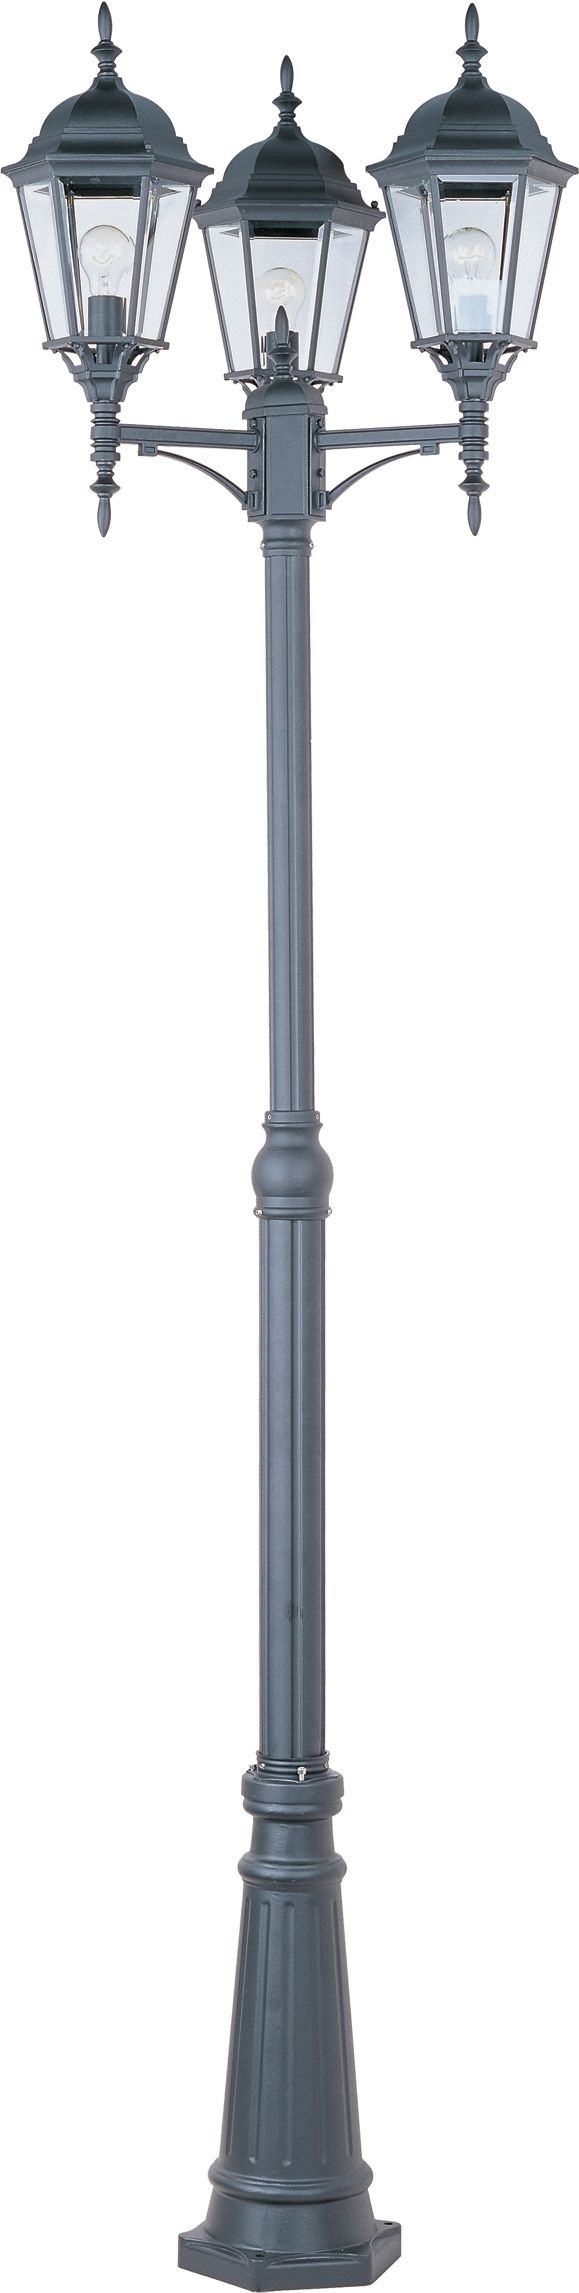 Outdoor Post Lights Outdoor Lamp Posts Outdoor Pole Lighting With Regard To Outdoor Led Post Lights Fixtures (Photo 15 of 15)